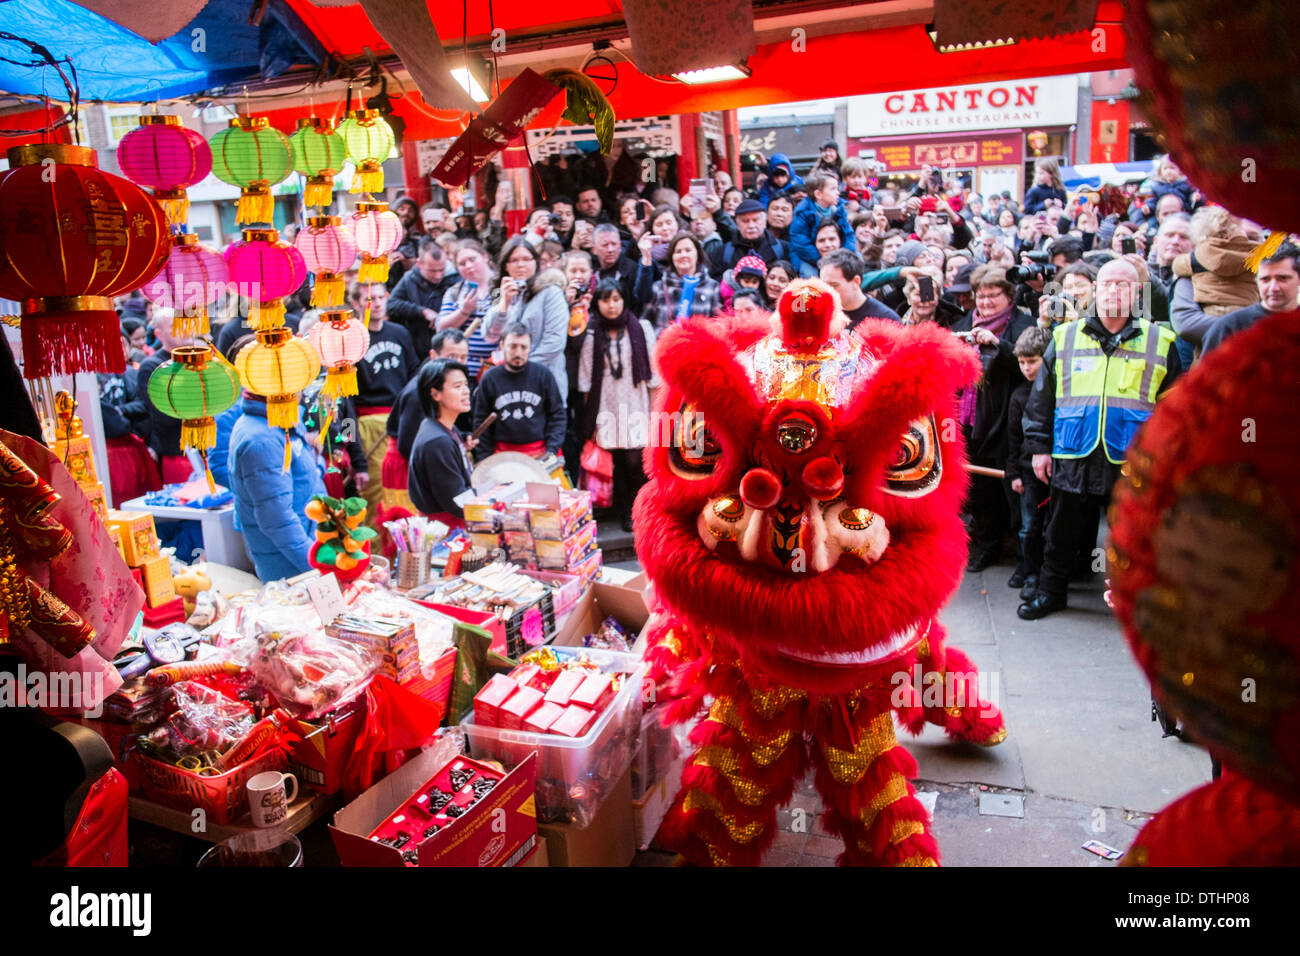 Dragon dance, West End, Chinese New Year celebrations, London, United Kingdom Stock Photo